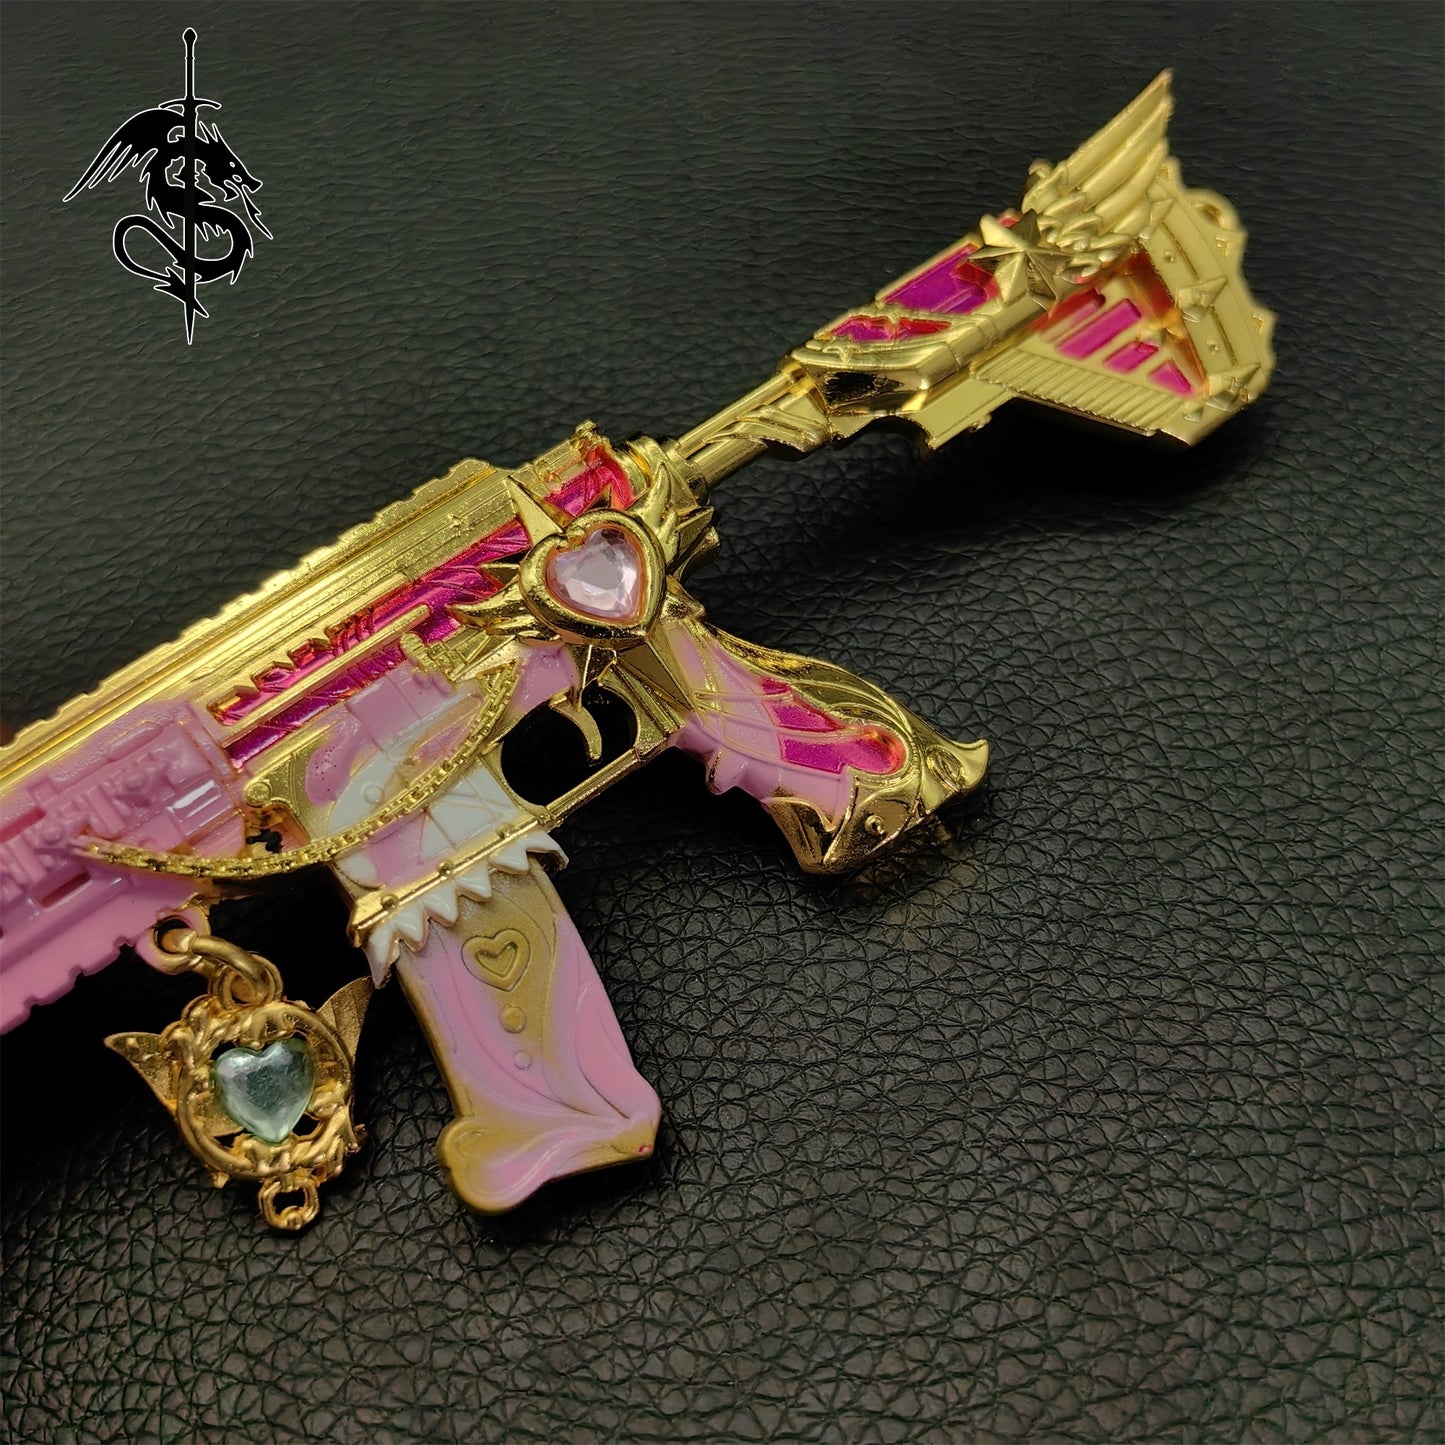 Pink Girl HK416 Miniature Metal M416 Rifle Small Replica